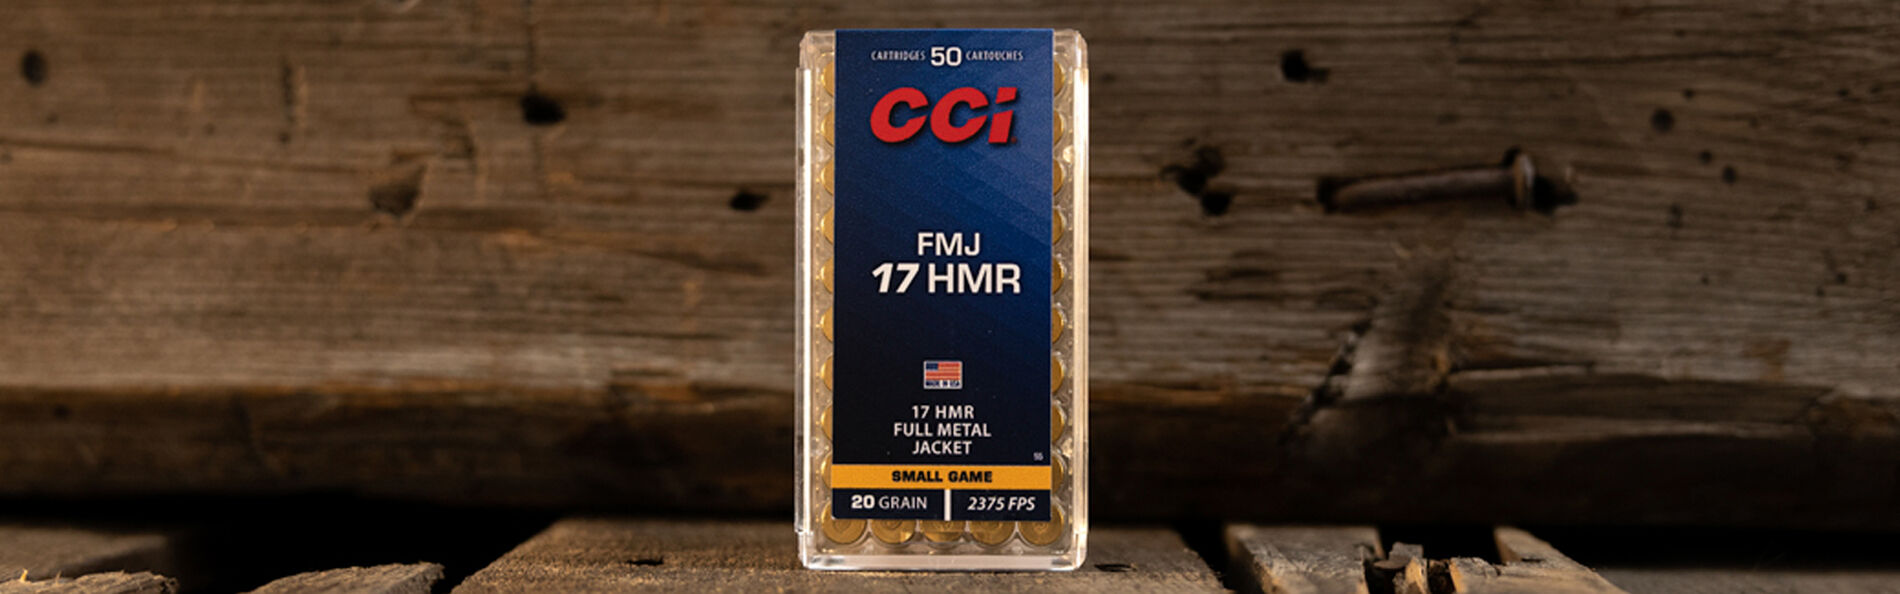 FMJ 17 HMR packaging